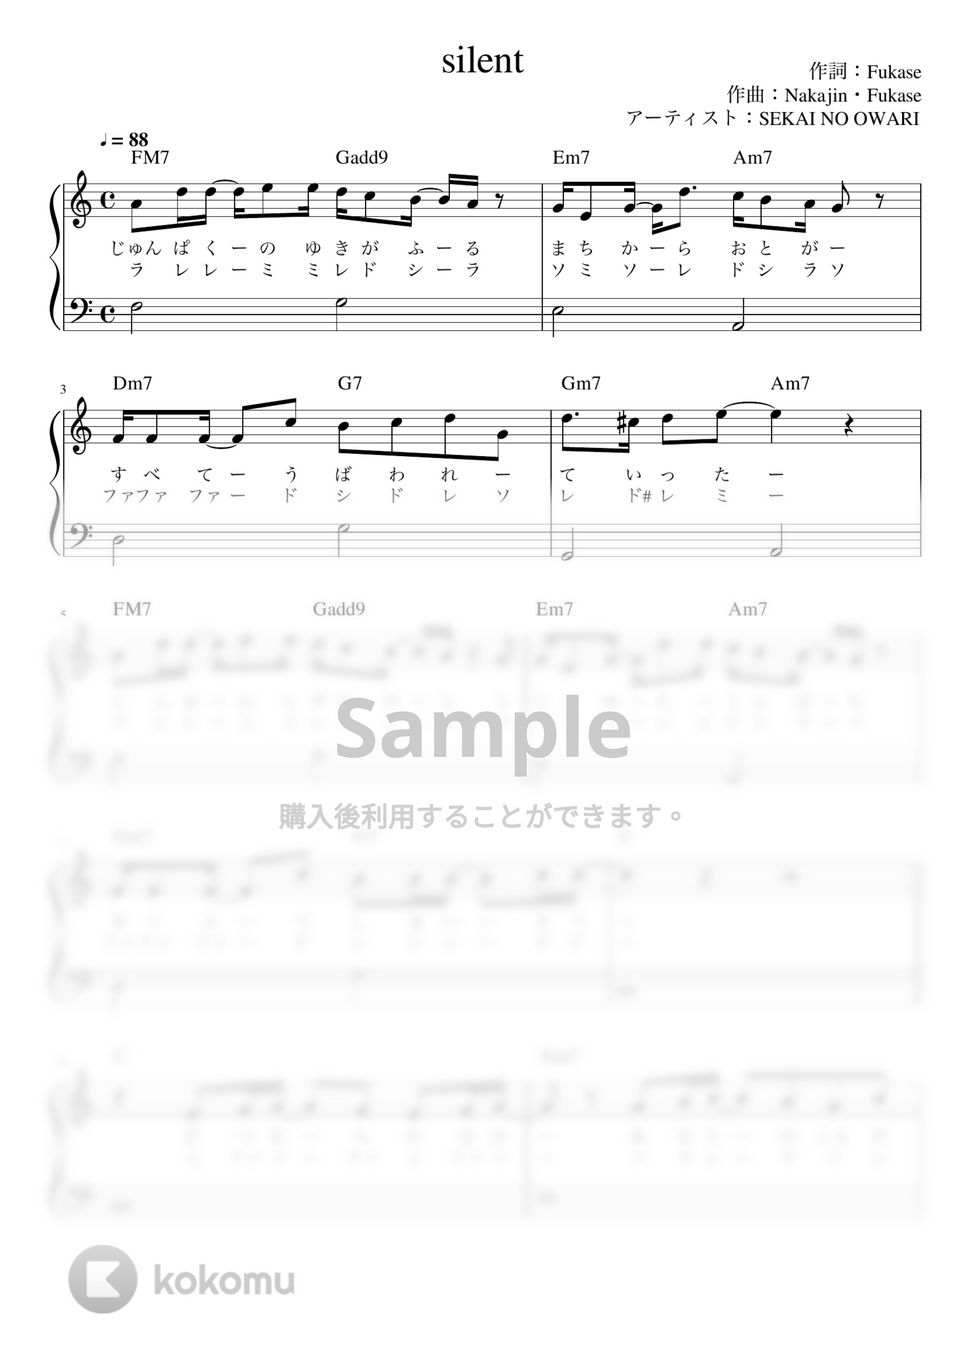 SEKAI NO OWARI - Silent (かんたん / 歌詞付き / ドレミ付き / 初心者) by piano.tokyo